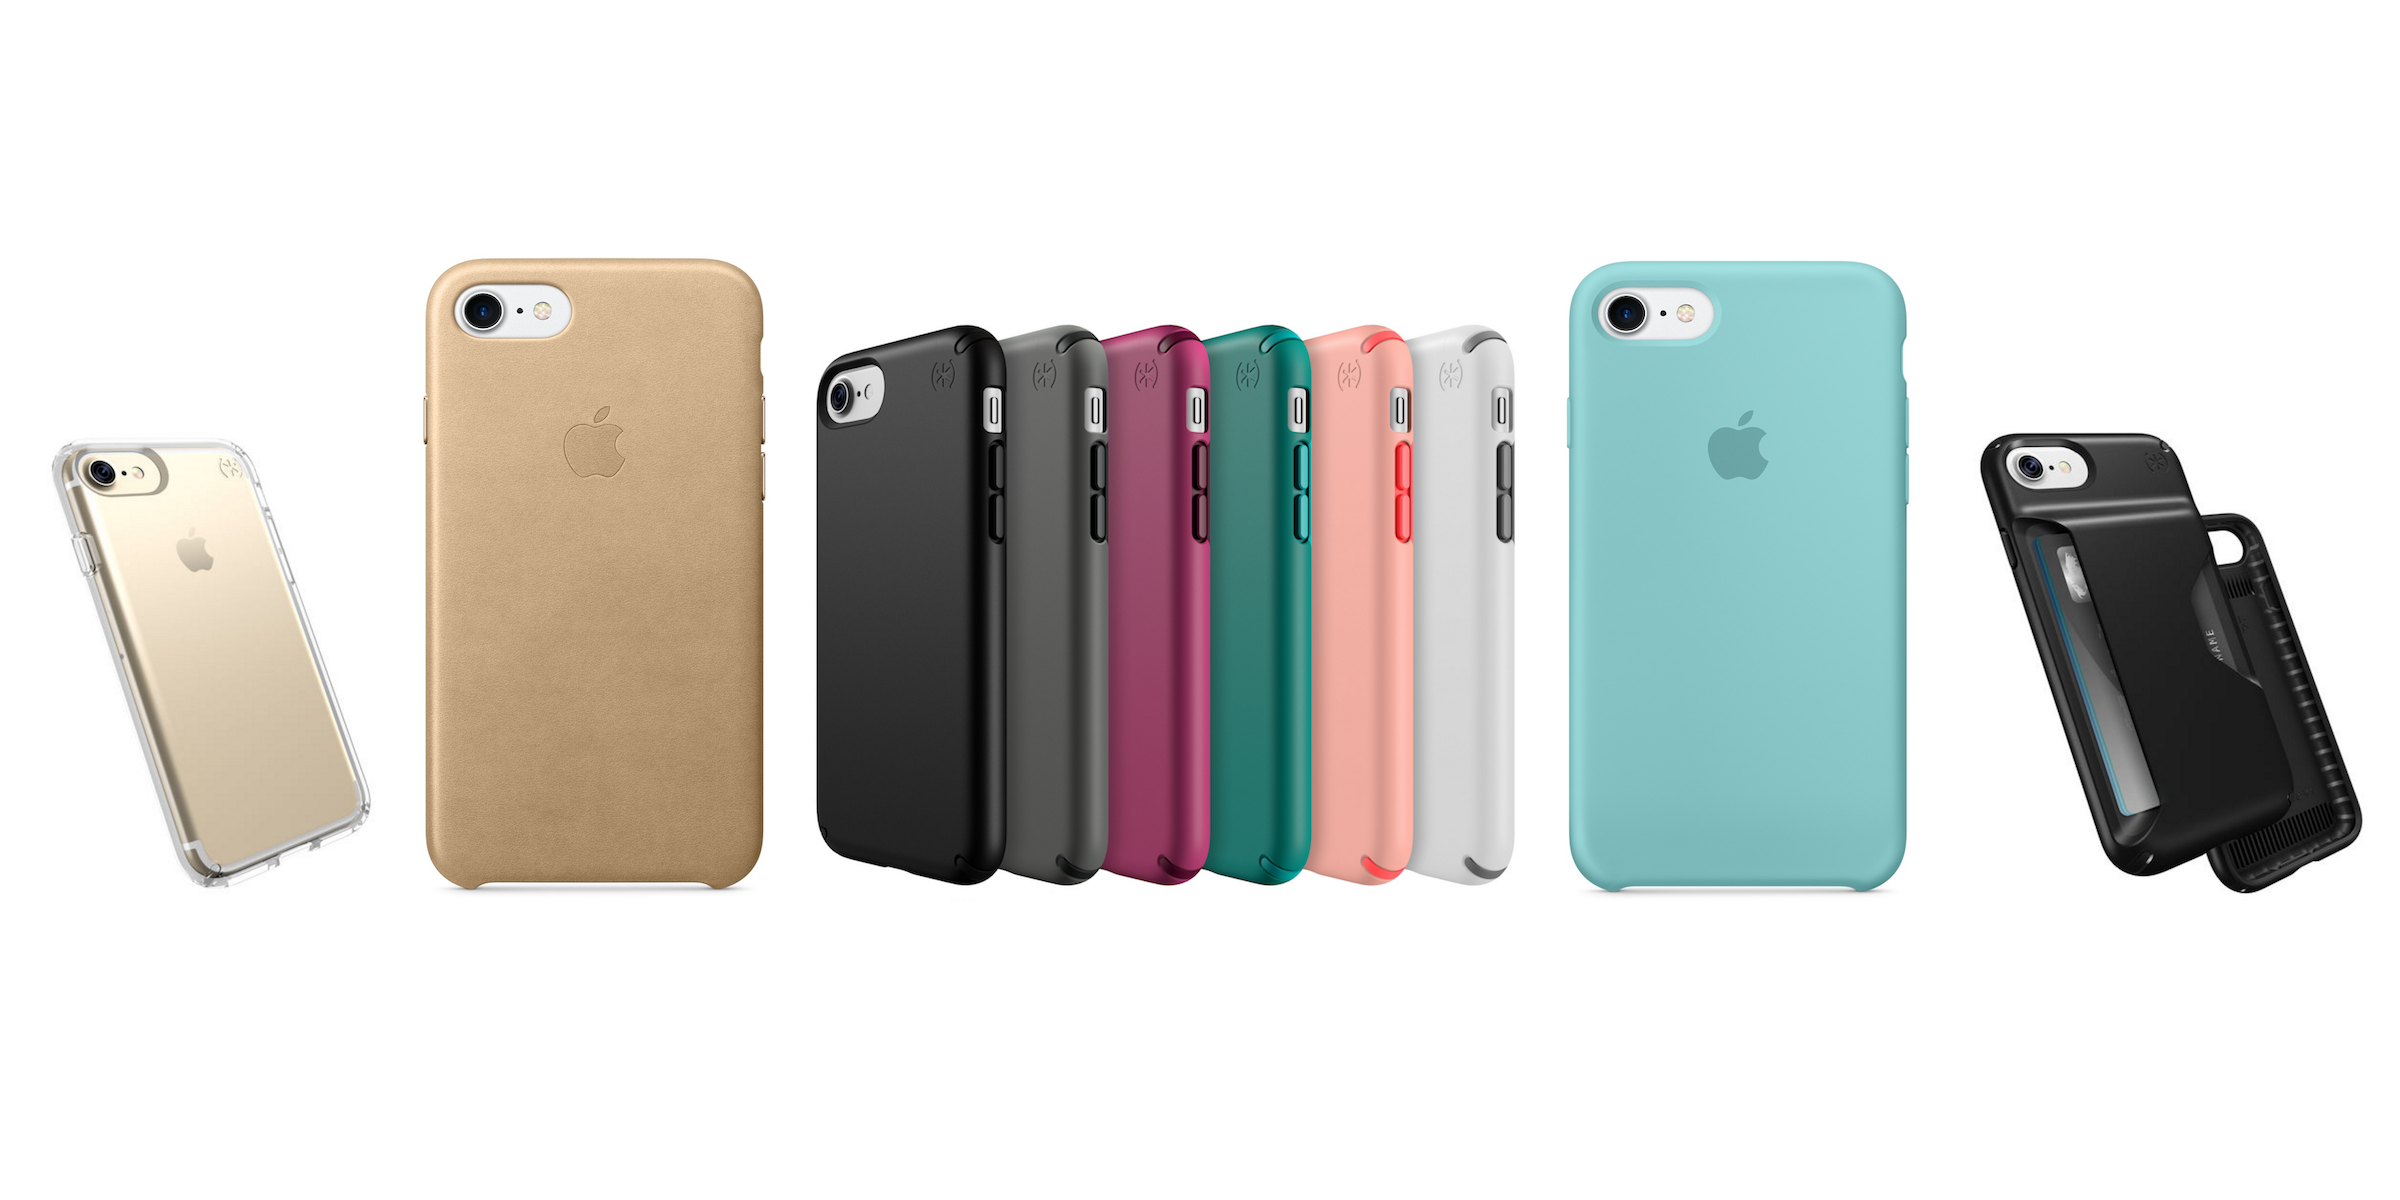 Schijnen Brullen verbrand The best iPhone 7 & 7 Plus cases available now - 9to5Mac